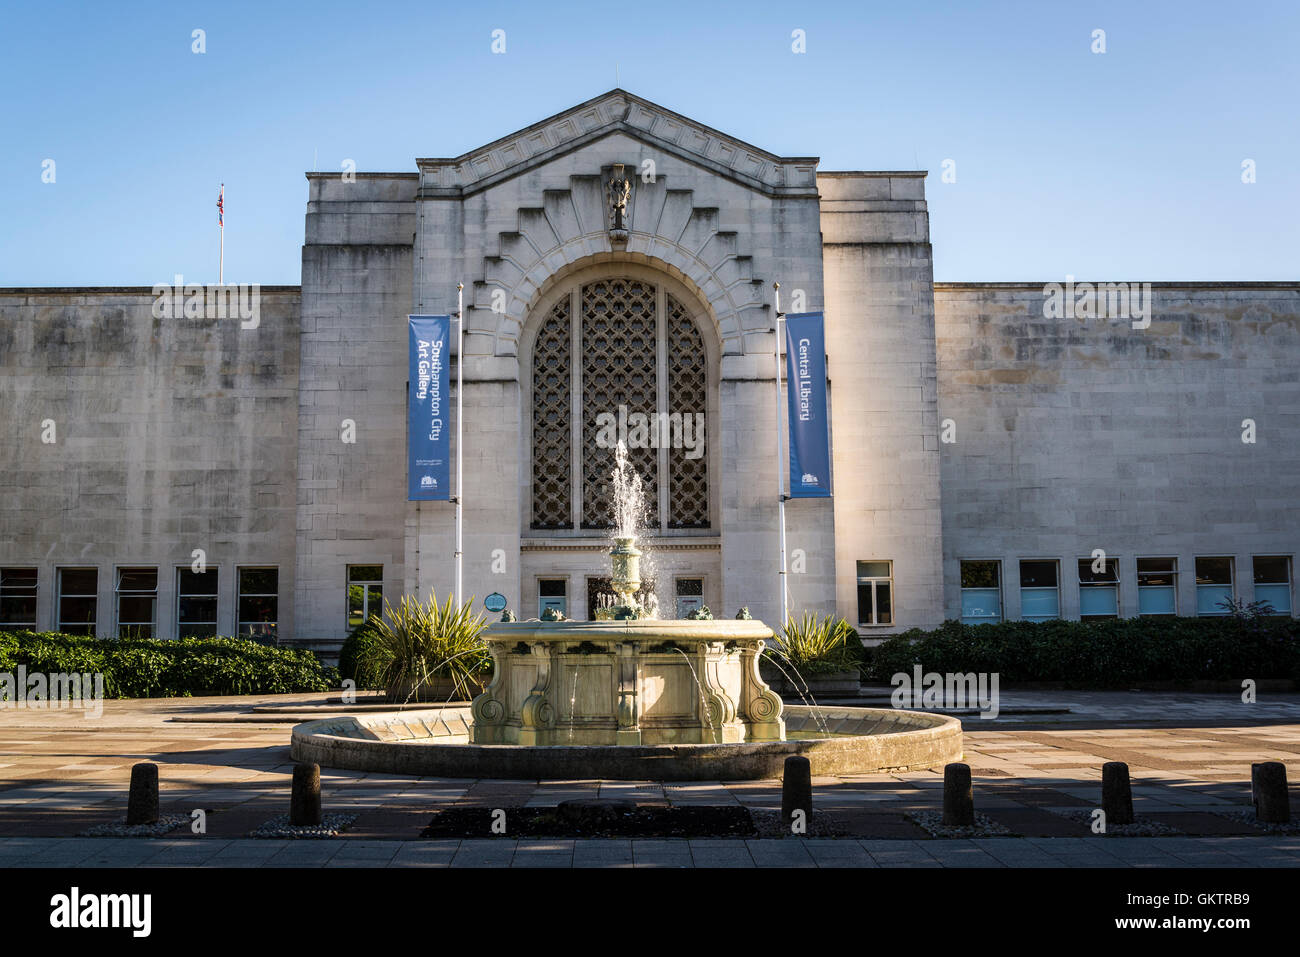 City Art Gallery, Civic Centre, Southampton, Hampshire, England, UK Stockfoto